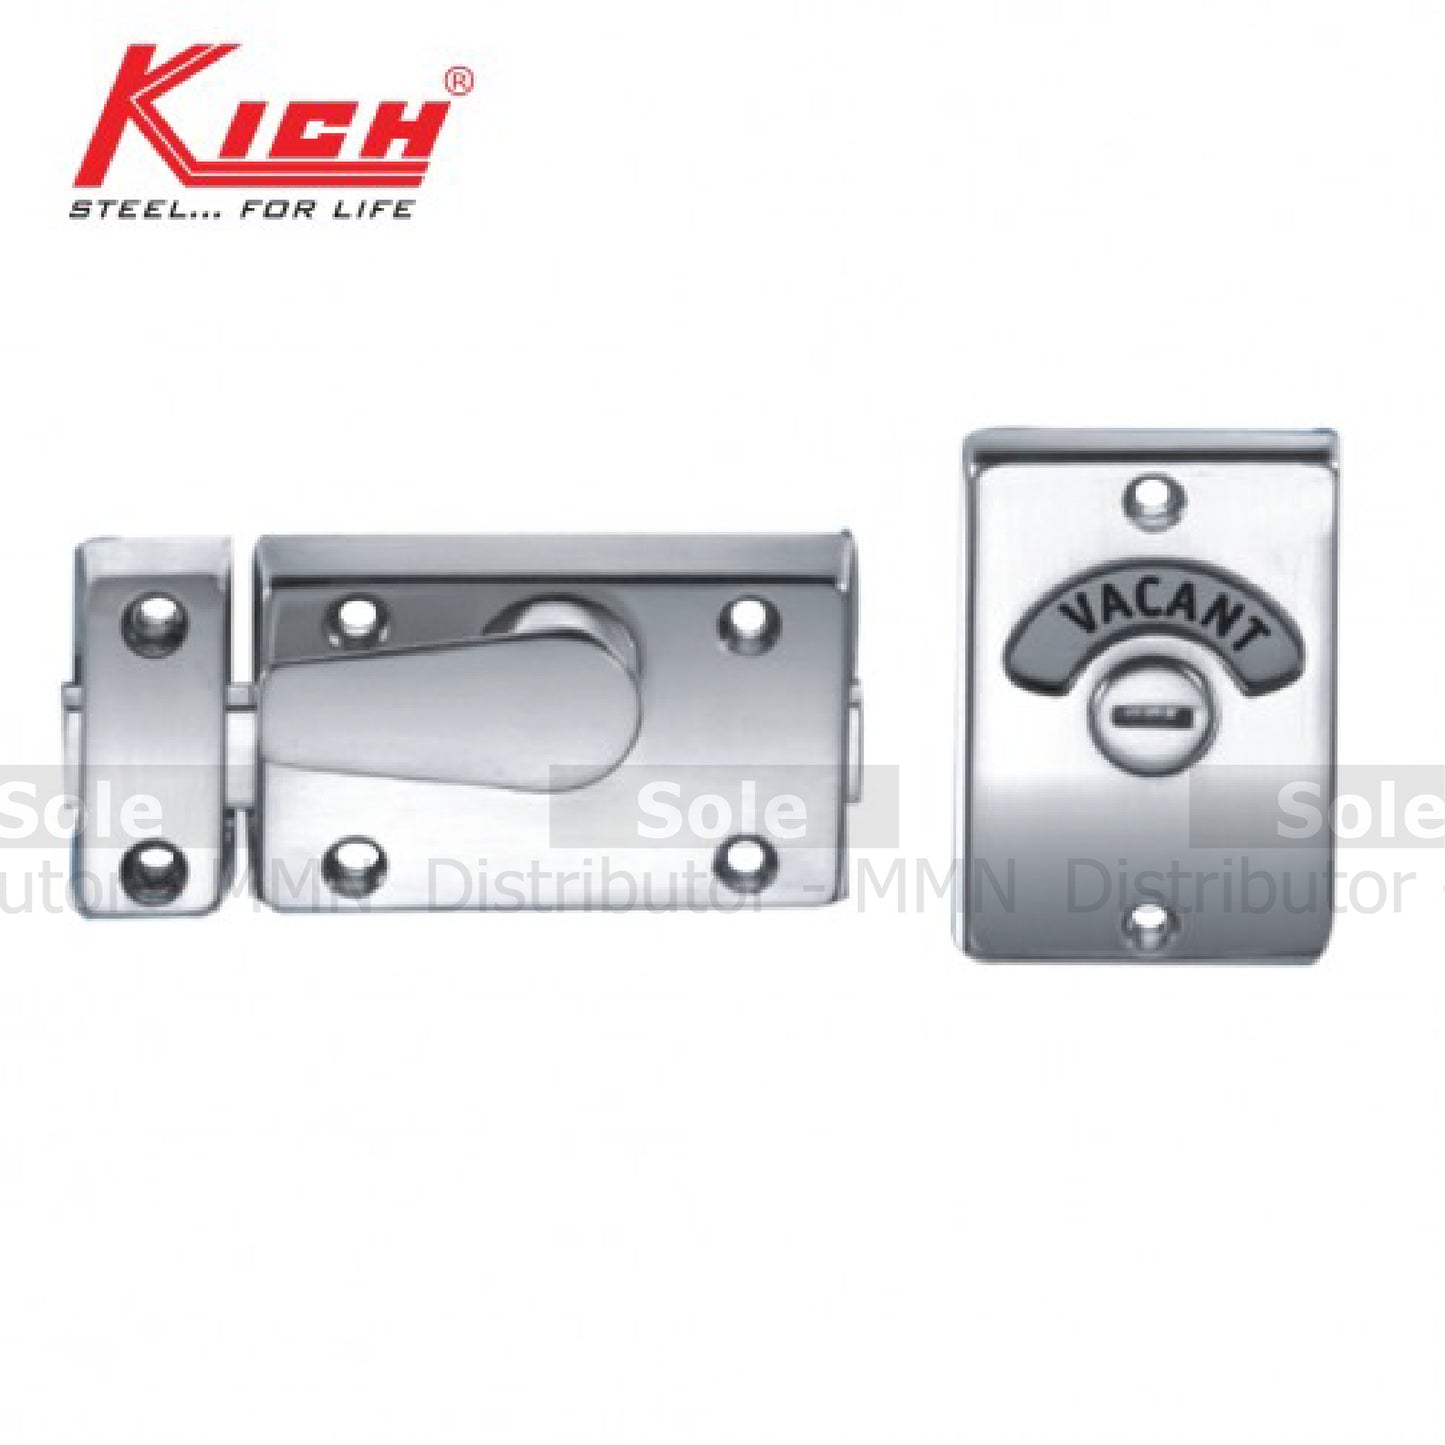 Kich Square Indicater Bolt Lock, Zinc Stainless Steel 316 Grade - KKL1B106SSS